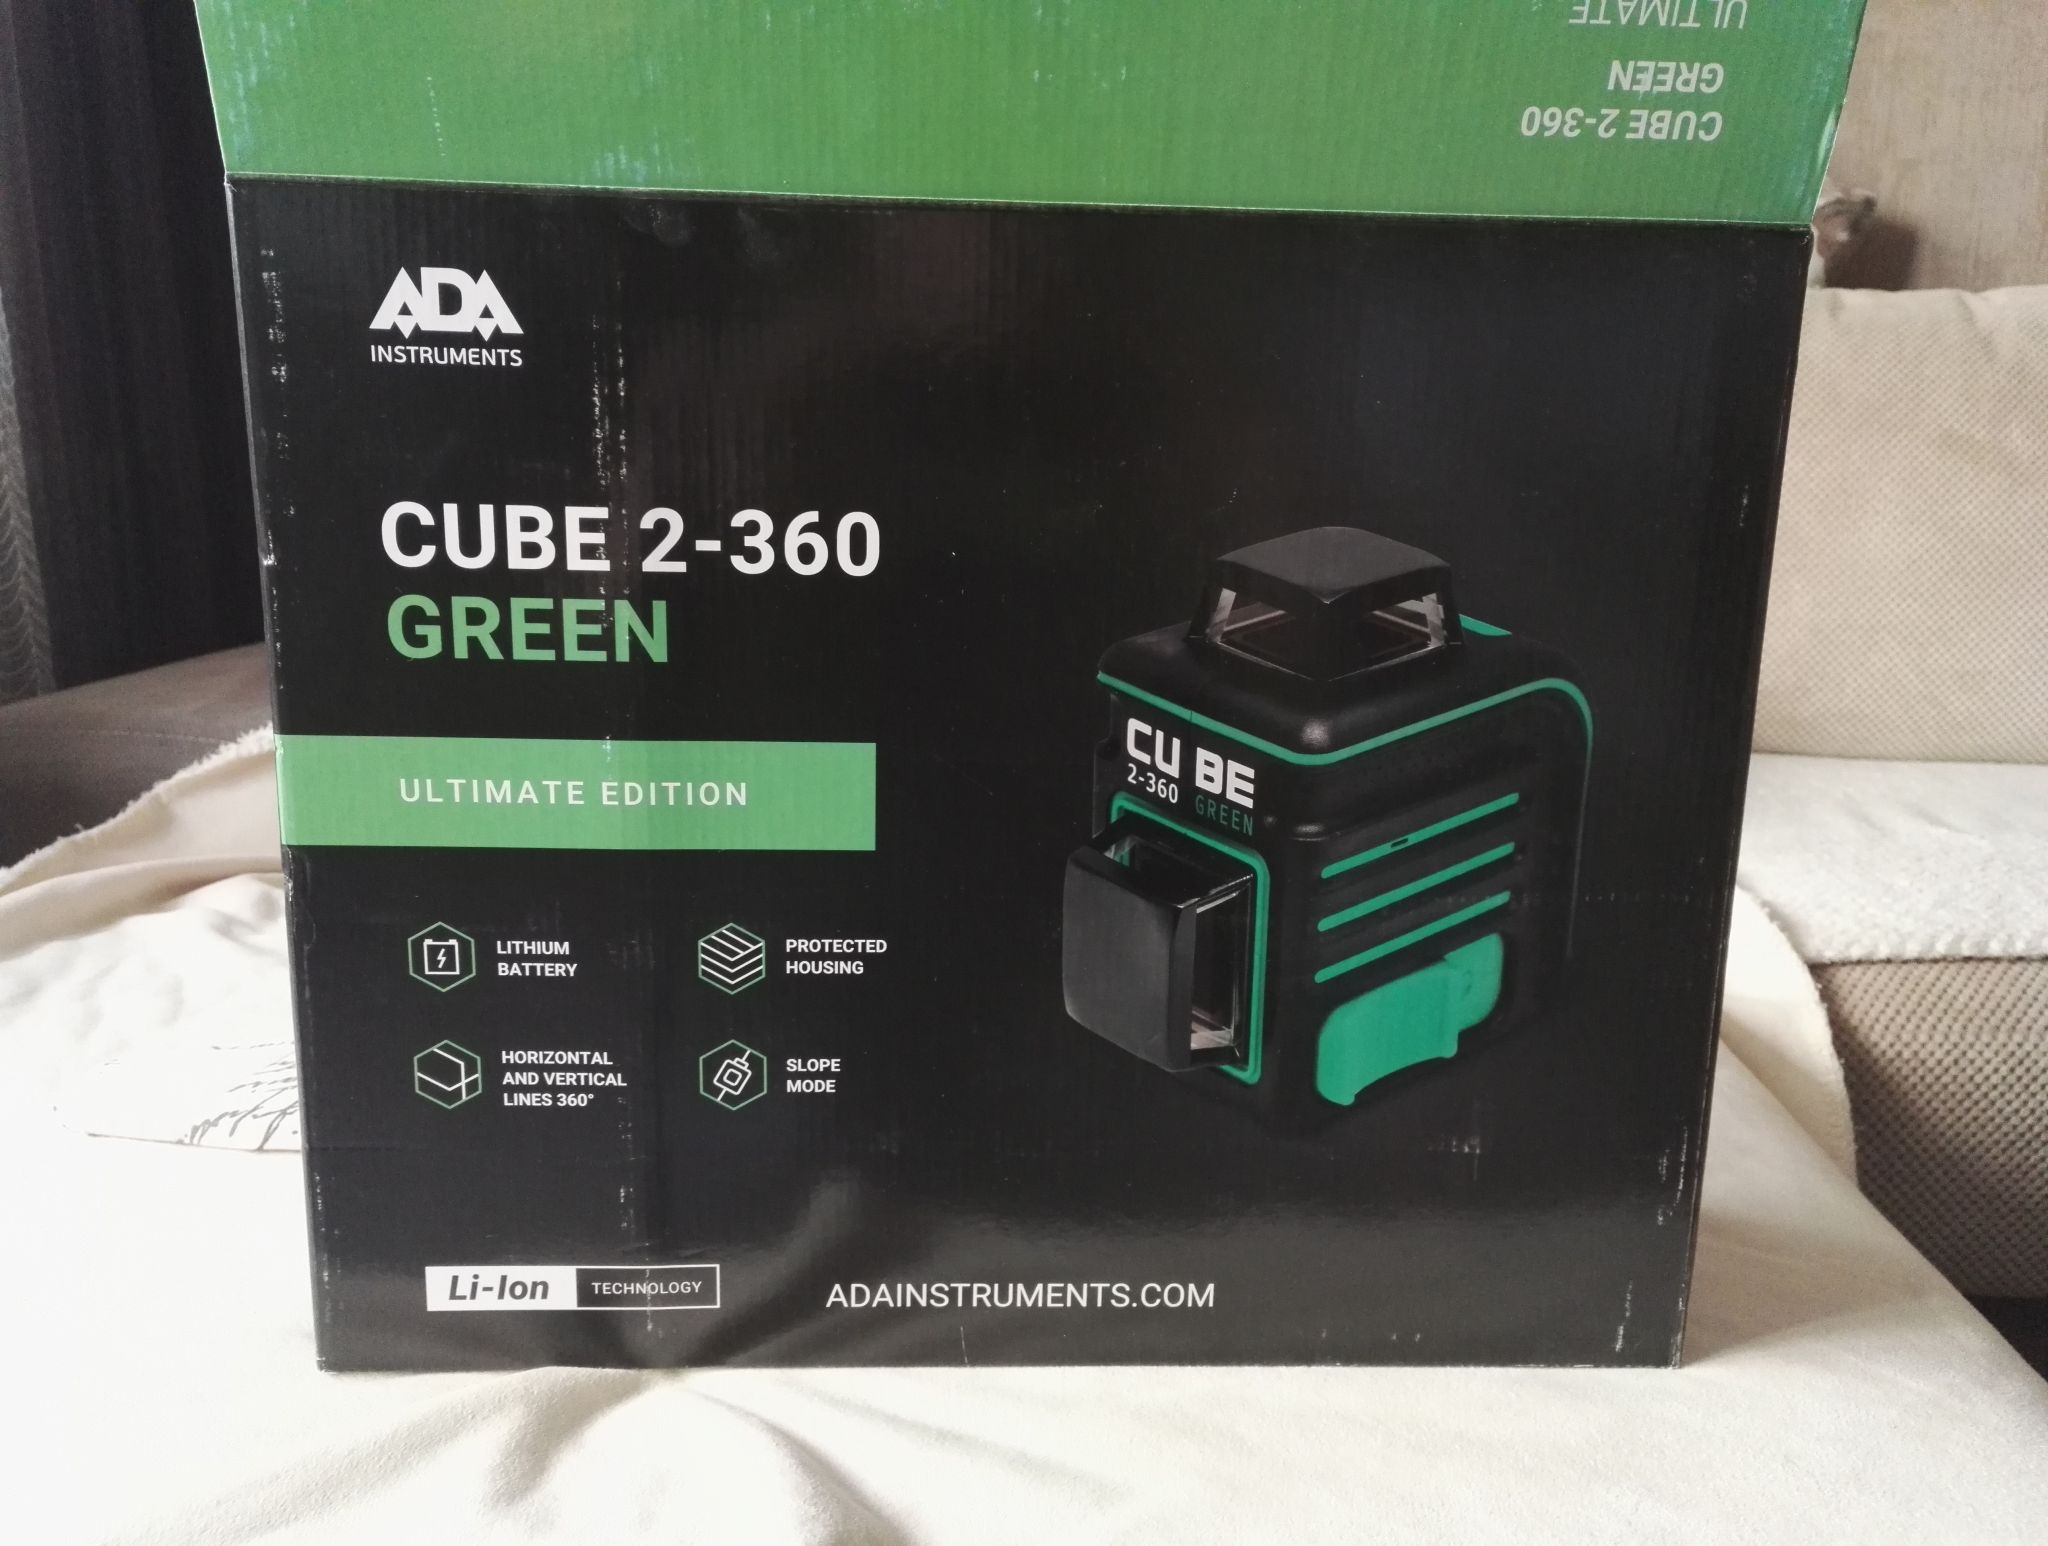 Cube 360 ultimate edition. Ada Cube 2-360 Green professional Edition а00534. Ada Cube 2-360 Green Ultimate Edition. Лазерный уровень ada Cube 3-360 Green Ultimate Edition а00569. Лазерный уровень Cube Green 3-360 515nm Power 1.0MW.